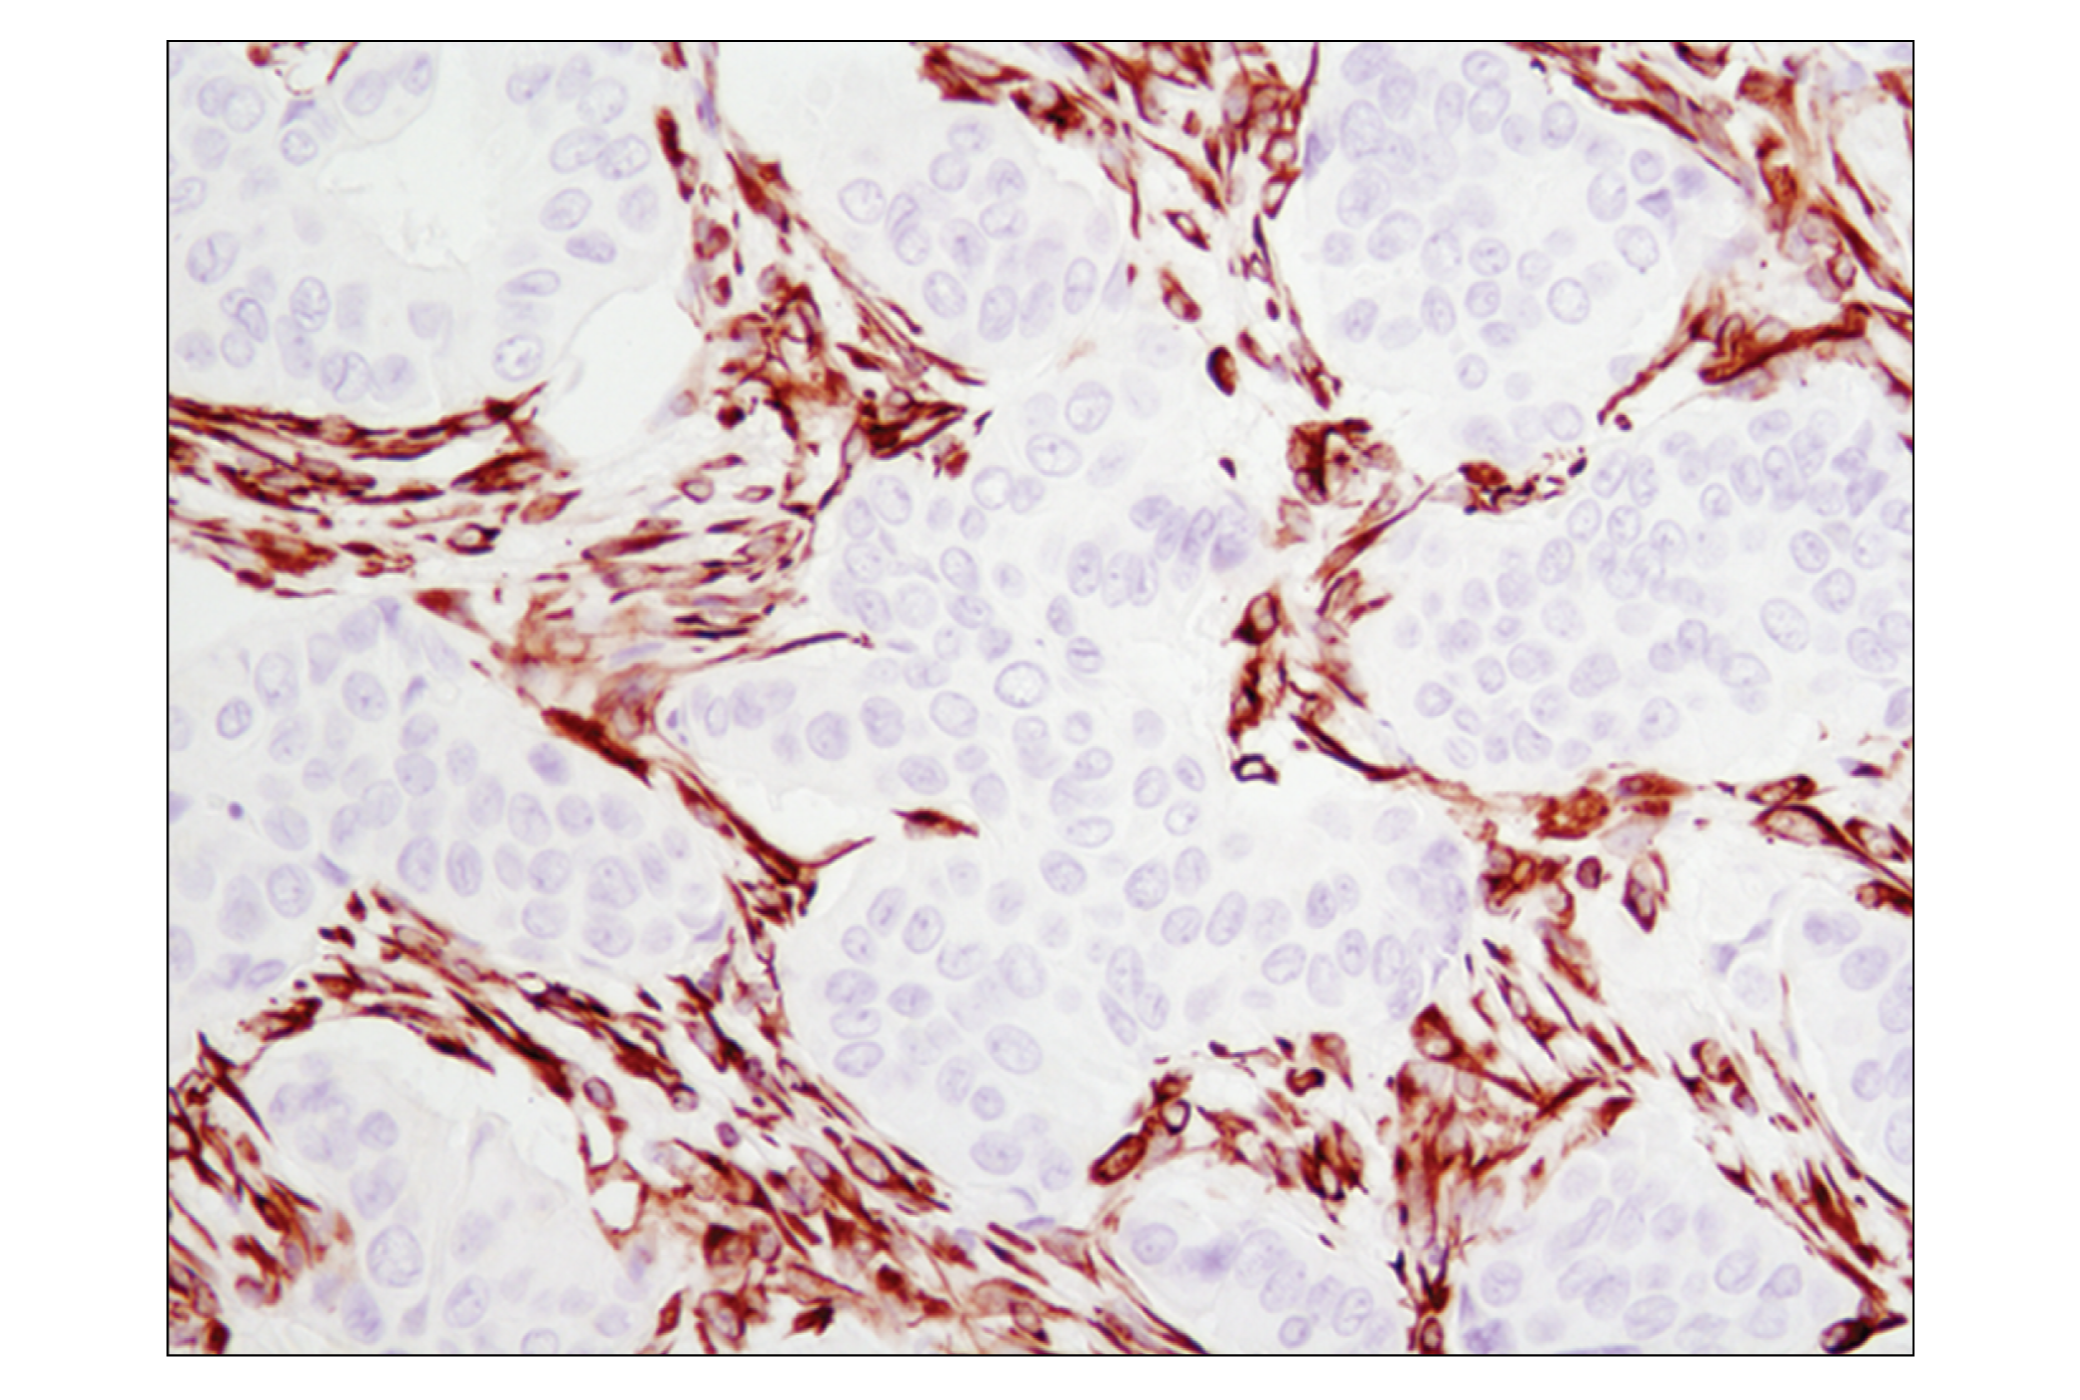  Image 34: Cytoskeletal Marker Antibody Sampler Kit